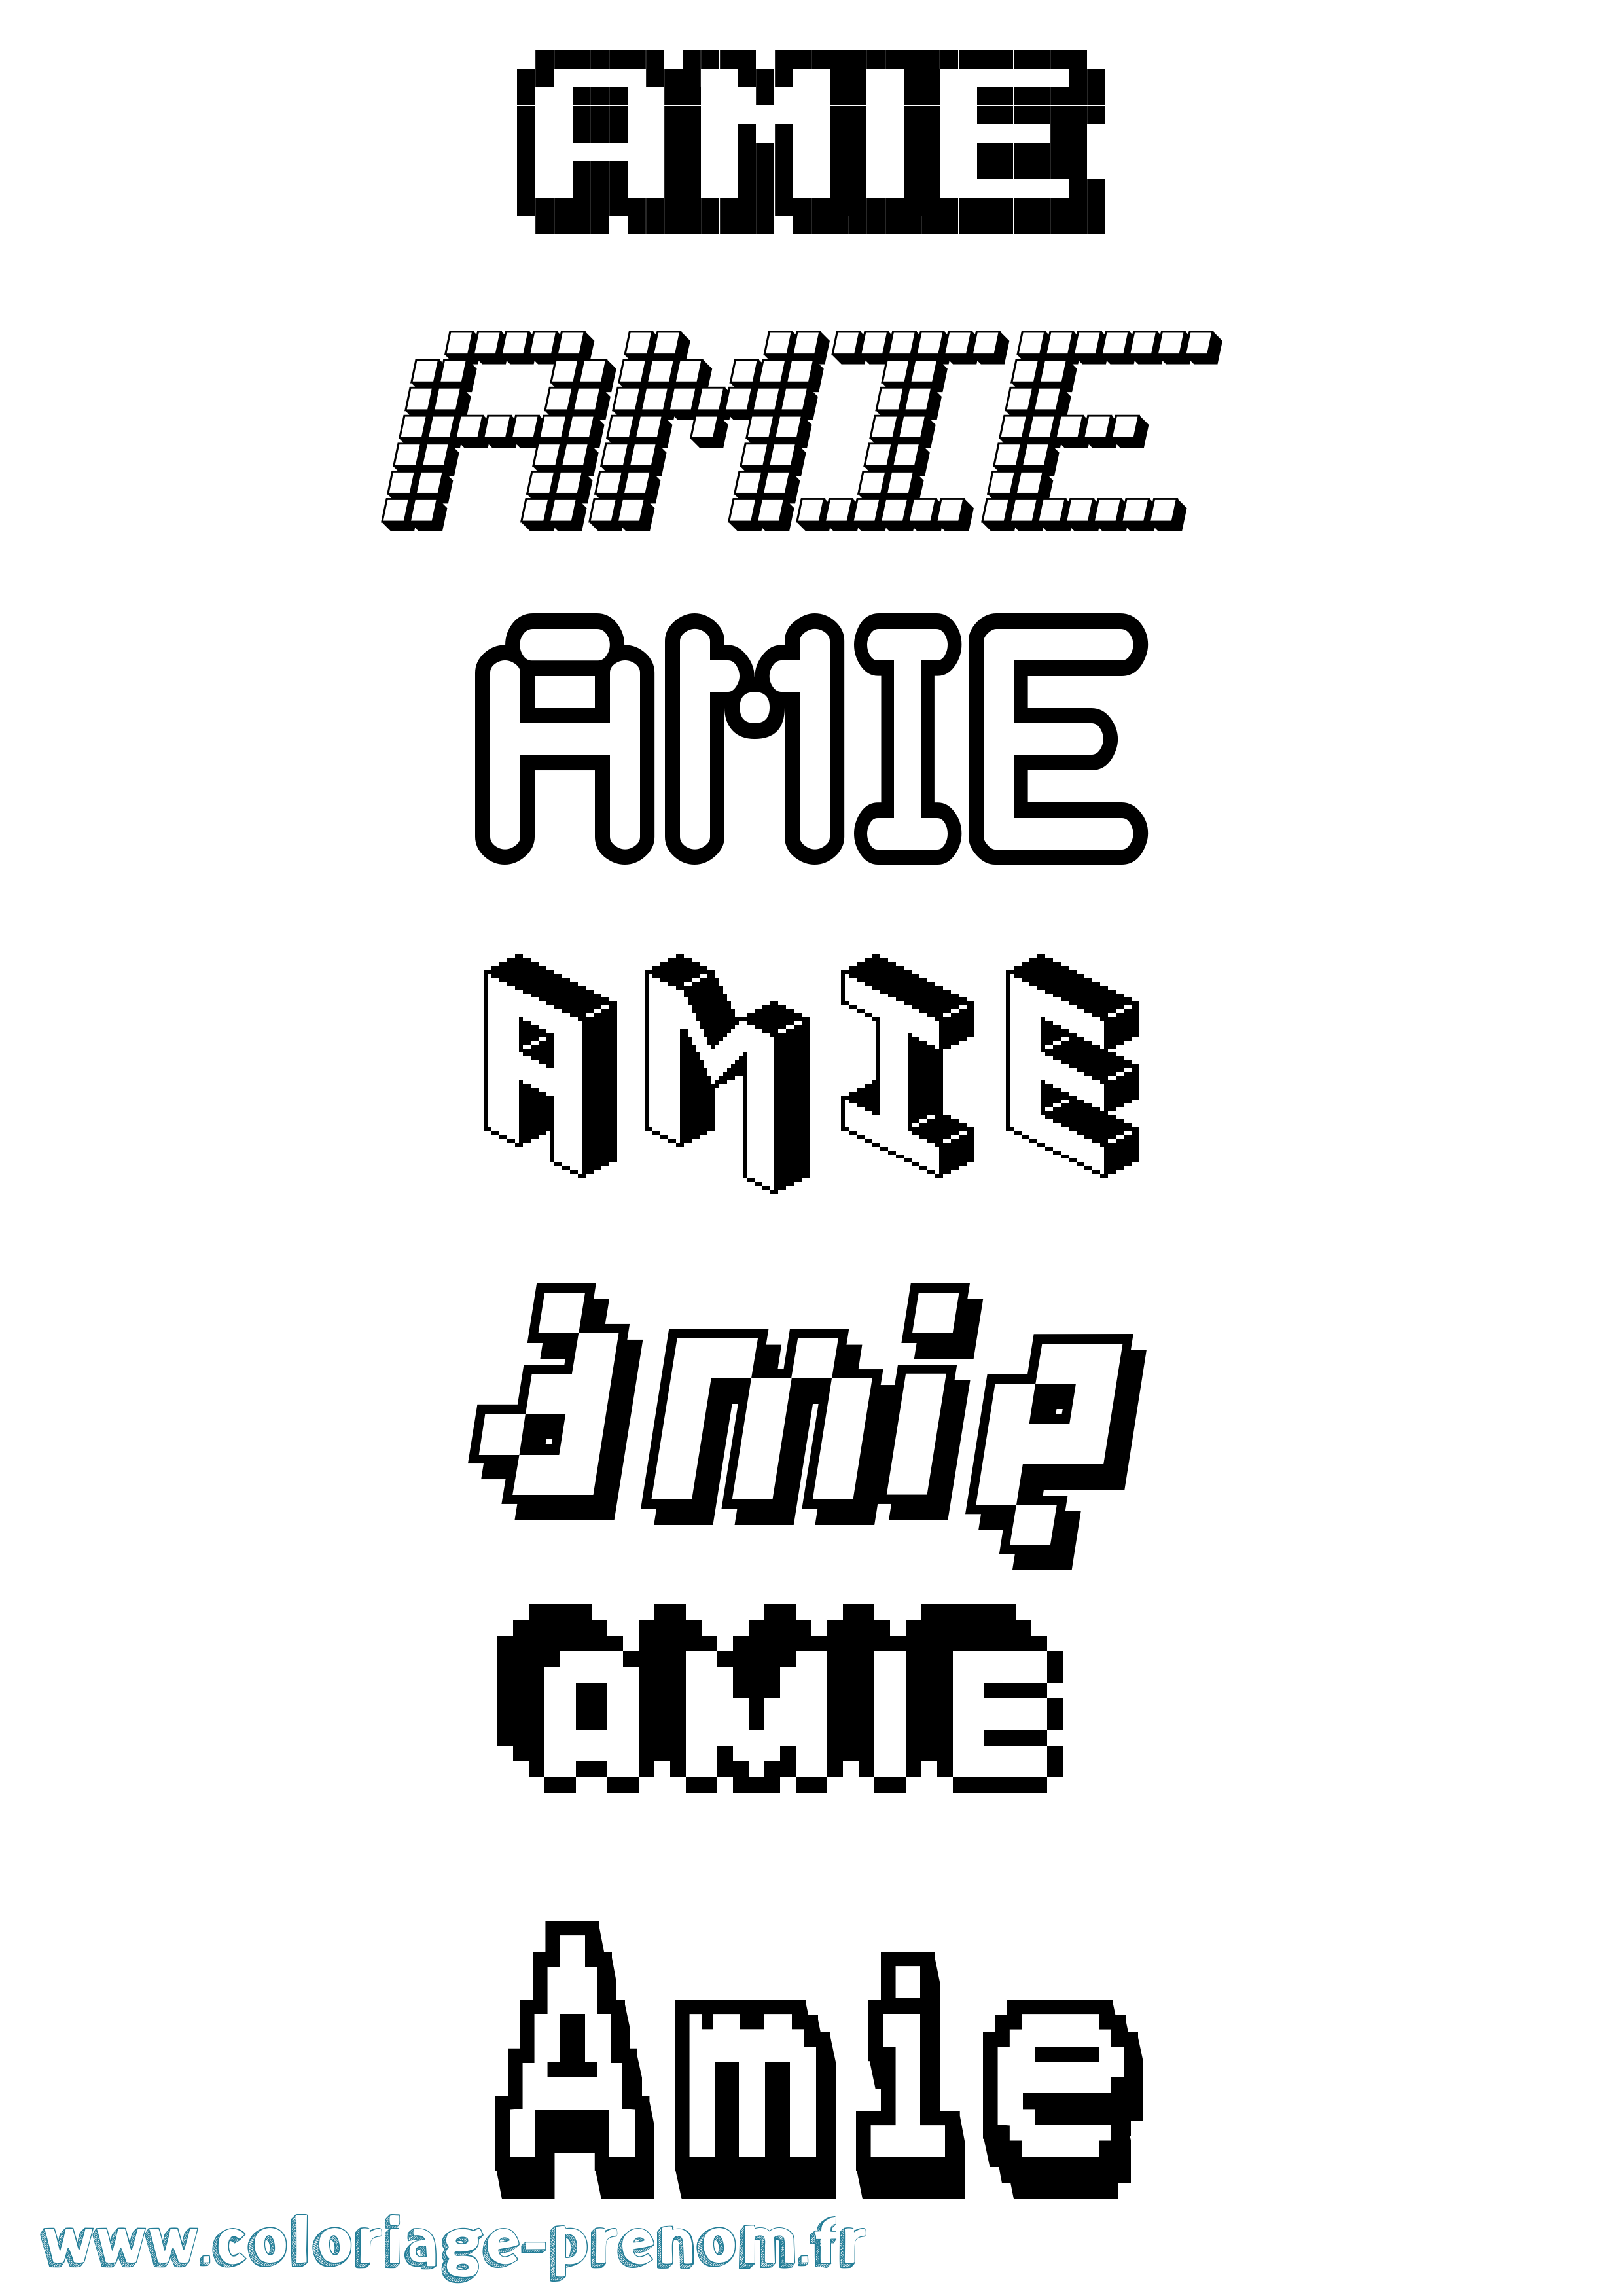 Coloriage prénom Amie Pixel